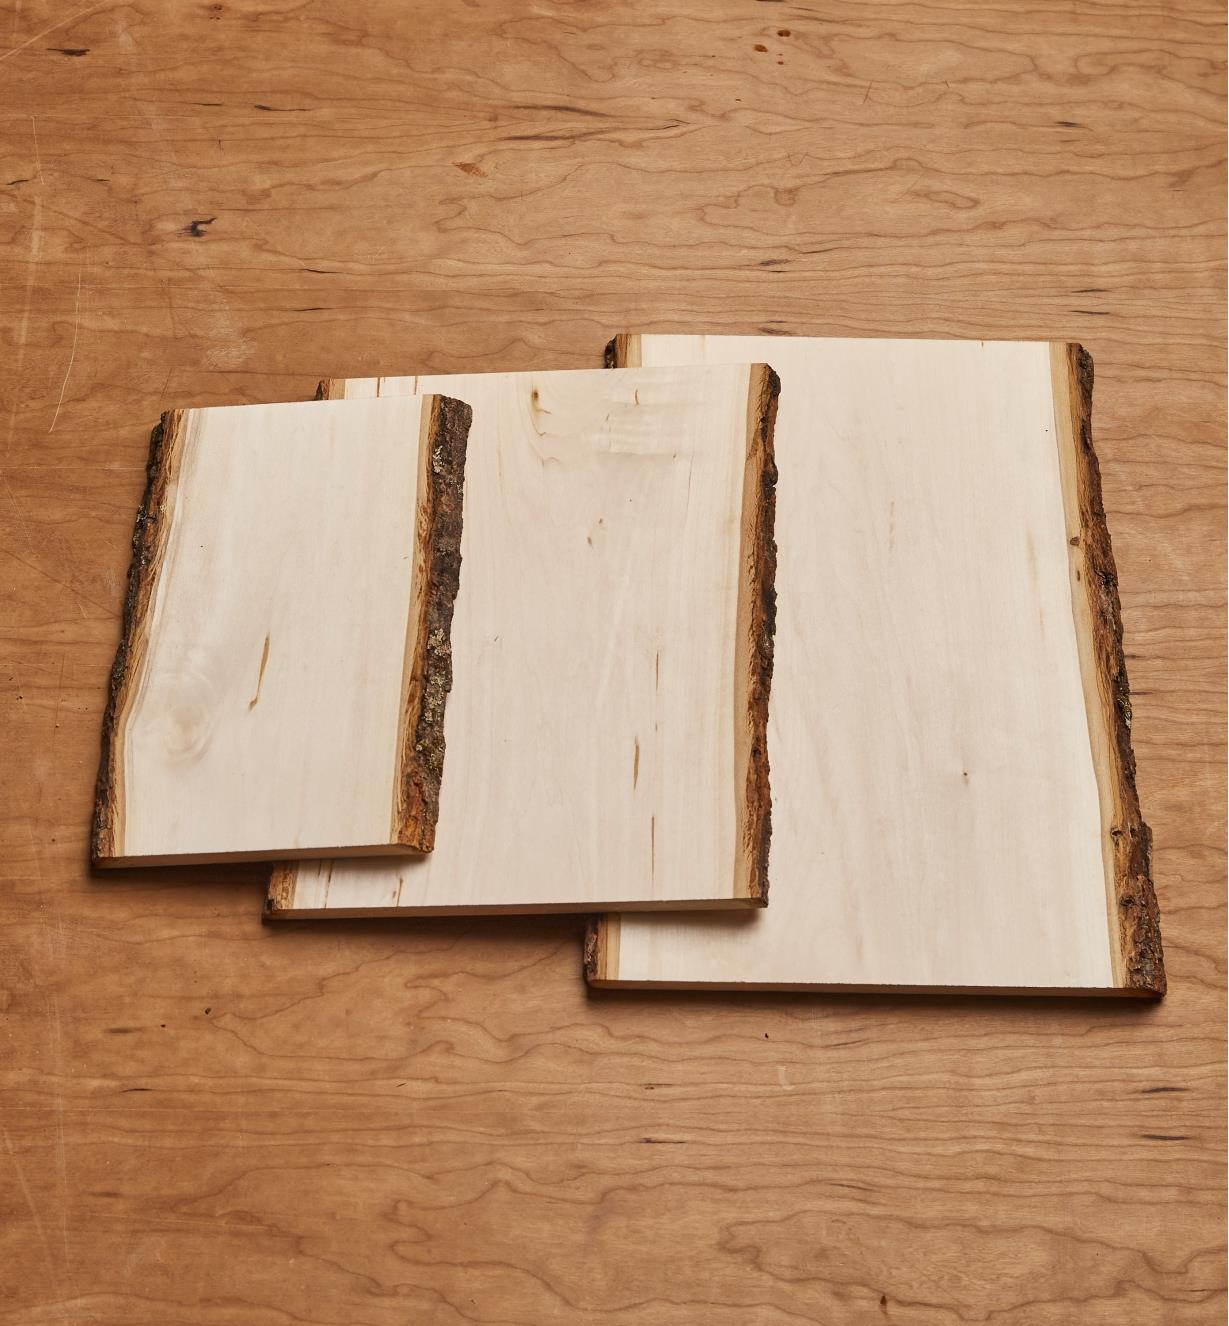 Comparing three sizes of live-edge rectangular basswood plaques 